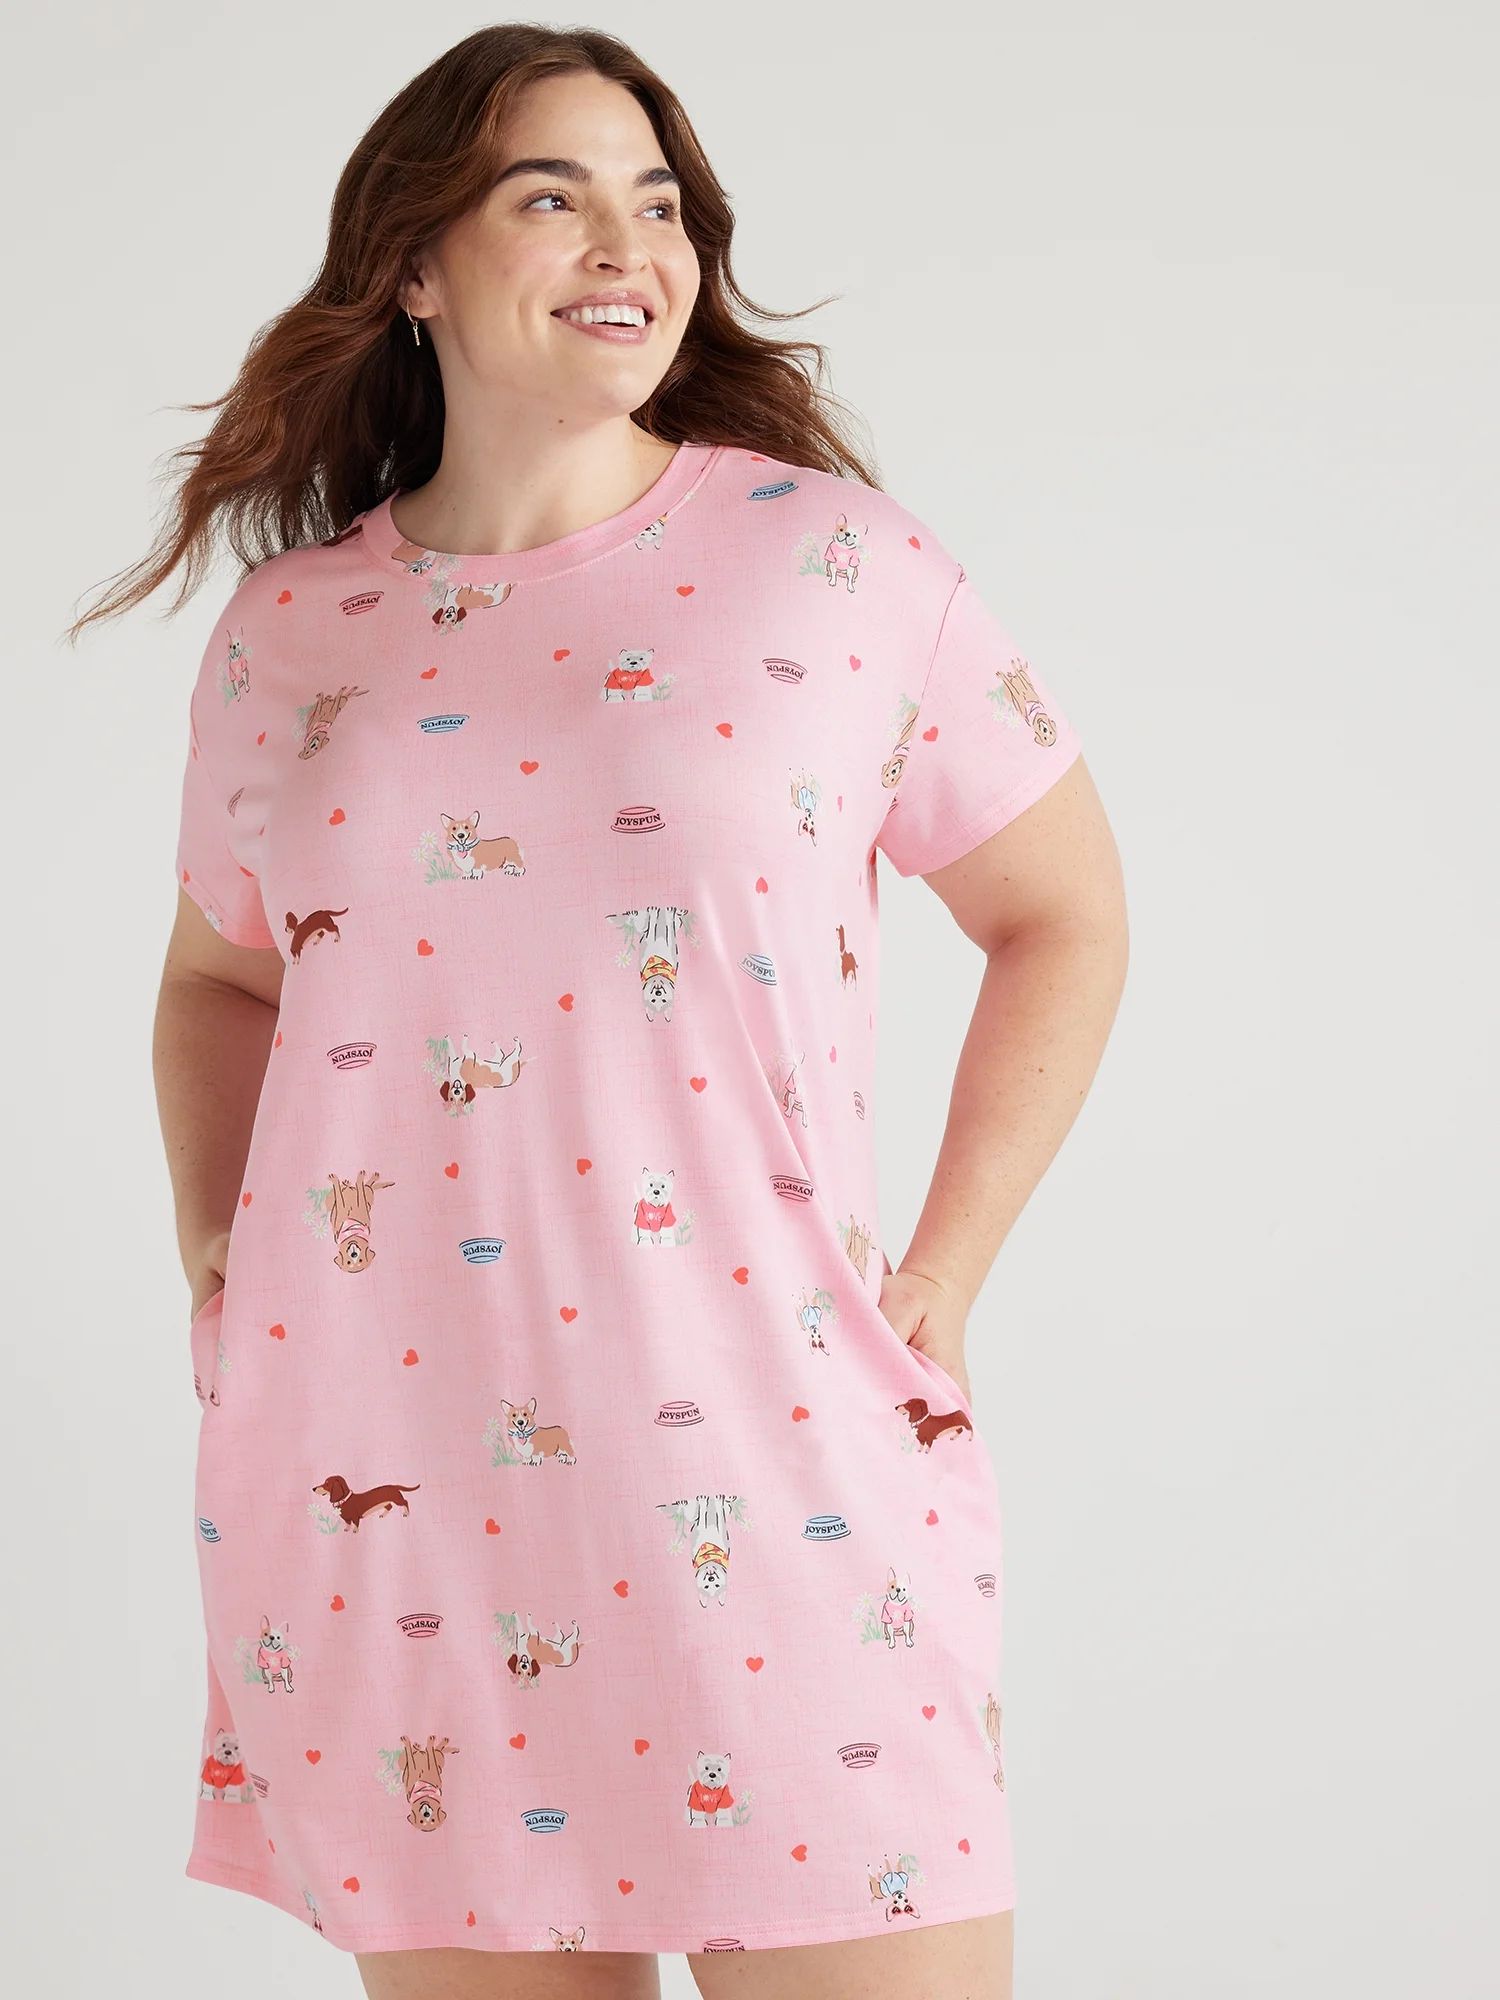 Joyspun Women's Short Sleeve Sleepshirt, Sizes S to 3X | Walmart (US)